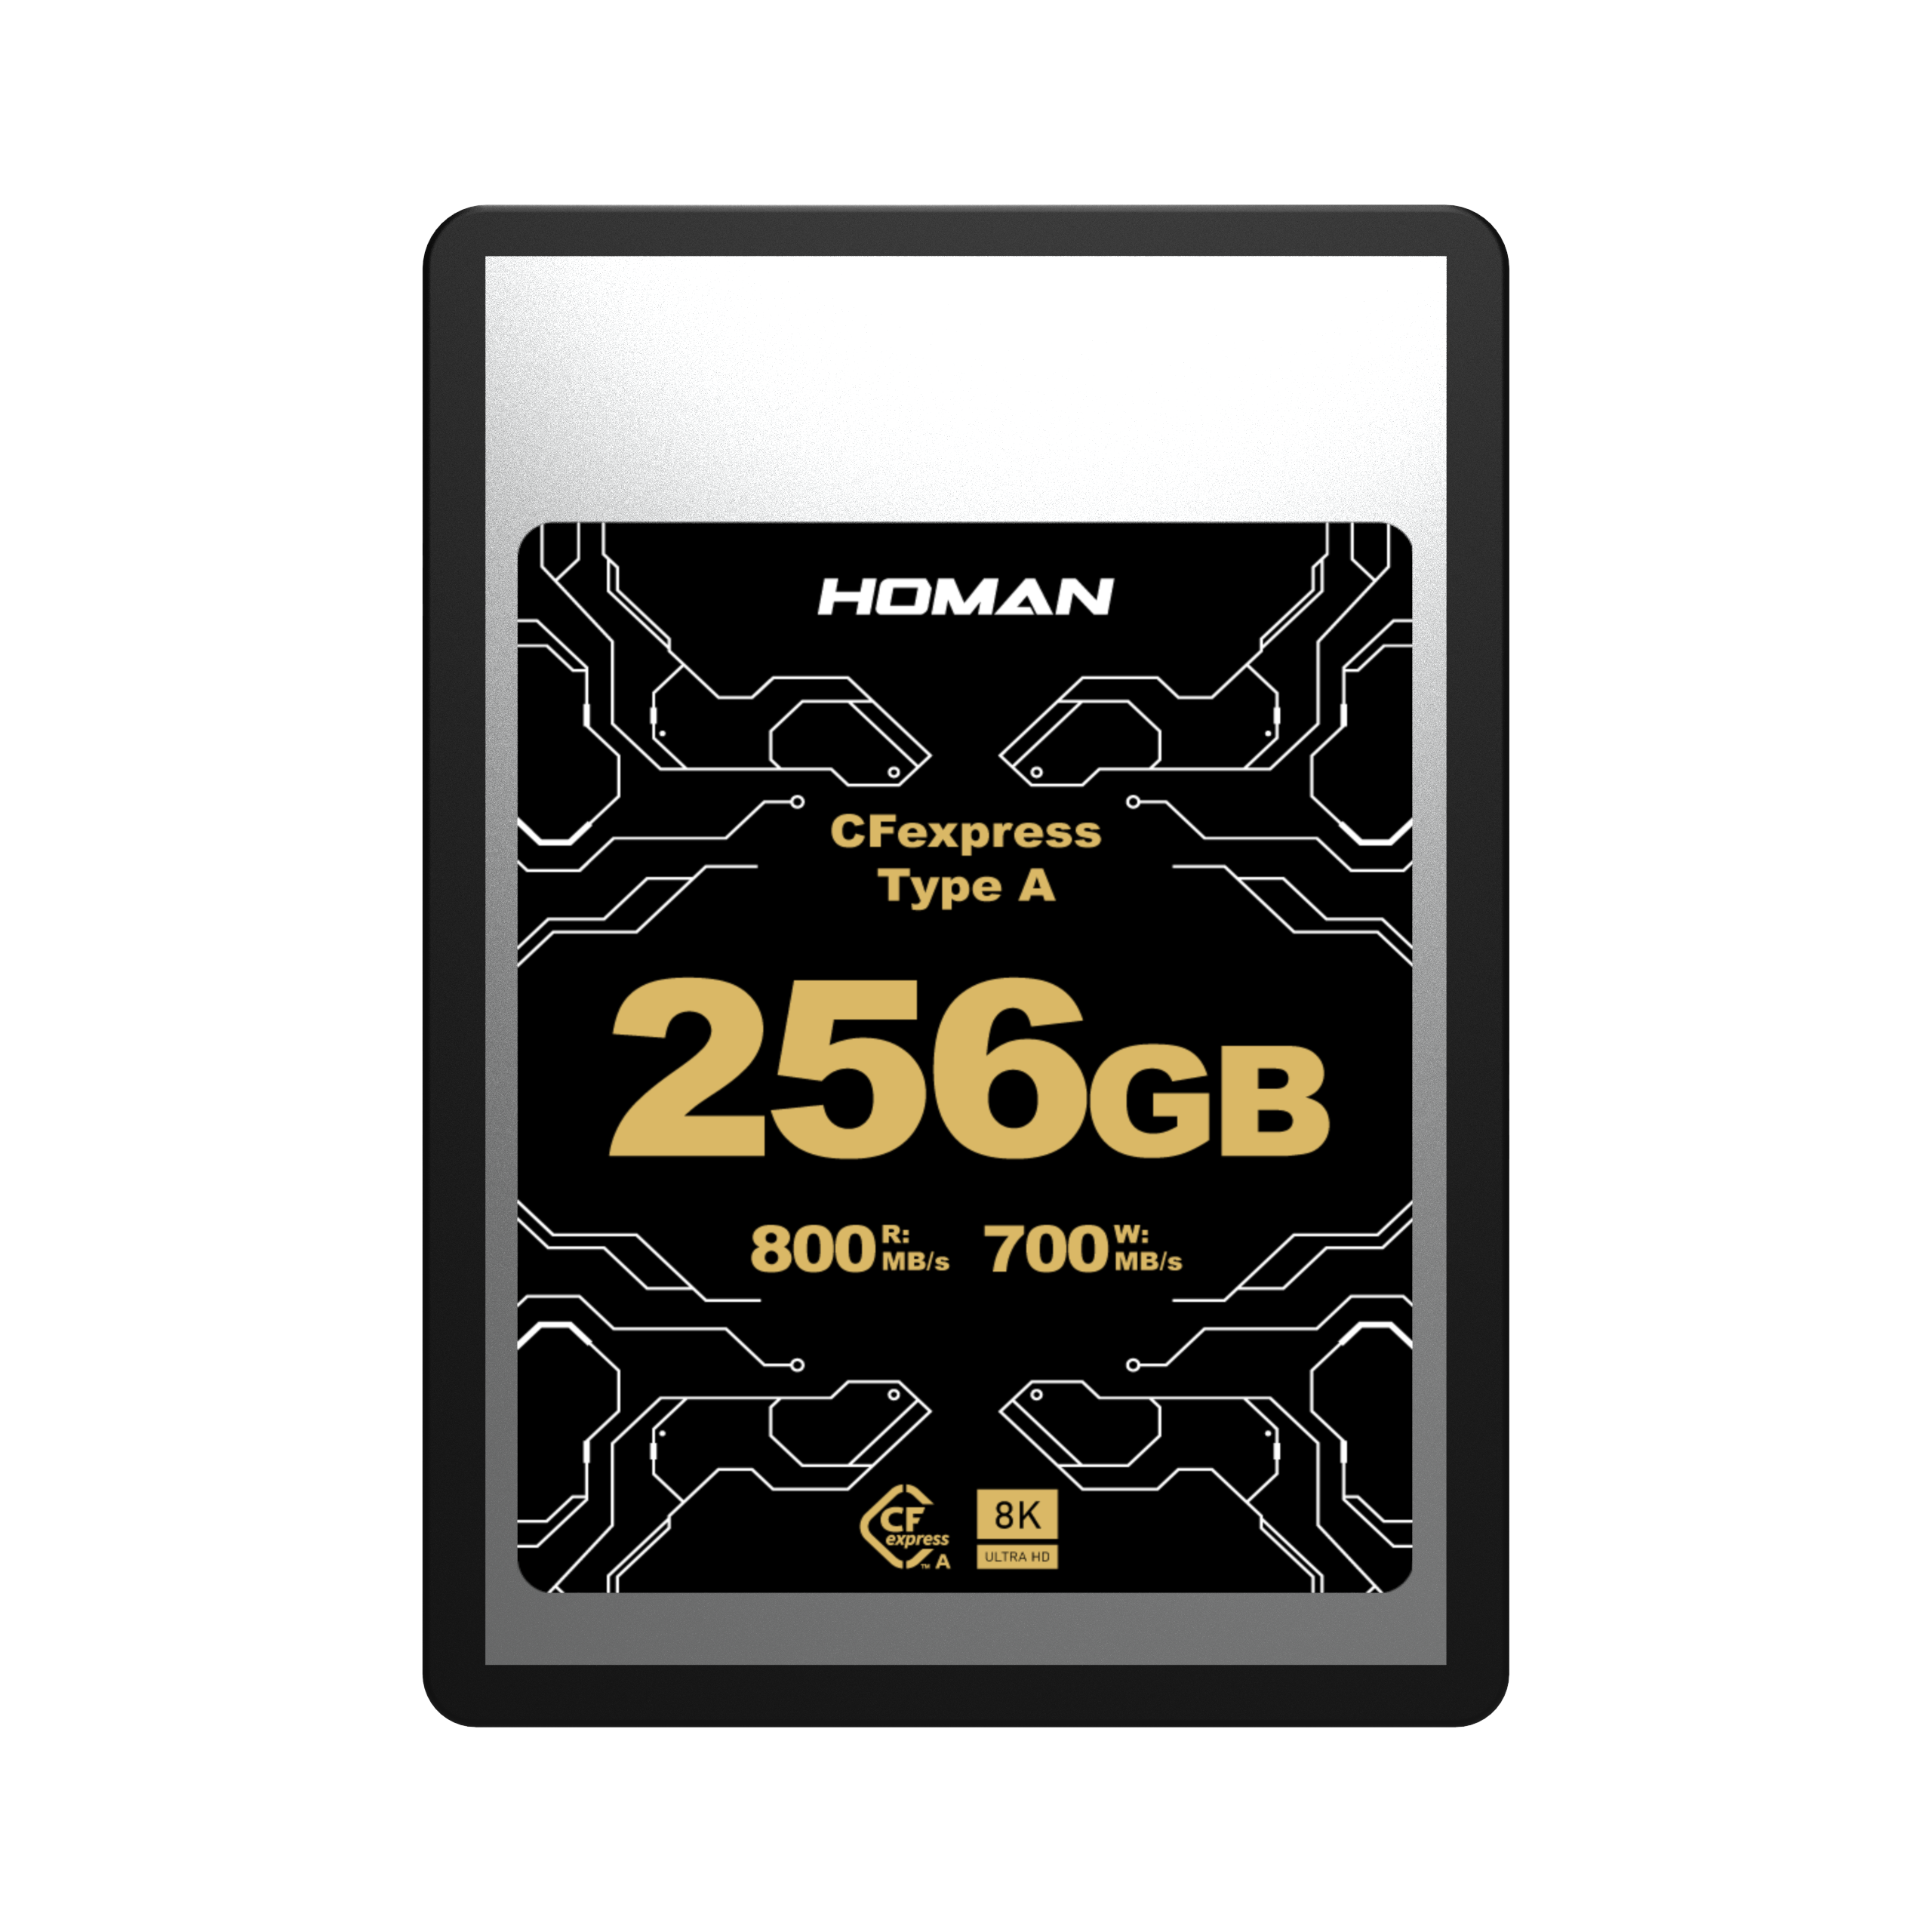 HOMAN CFexpress Card Type A 256GB